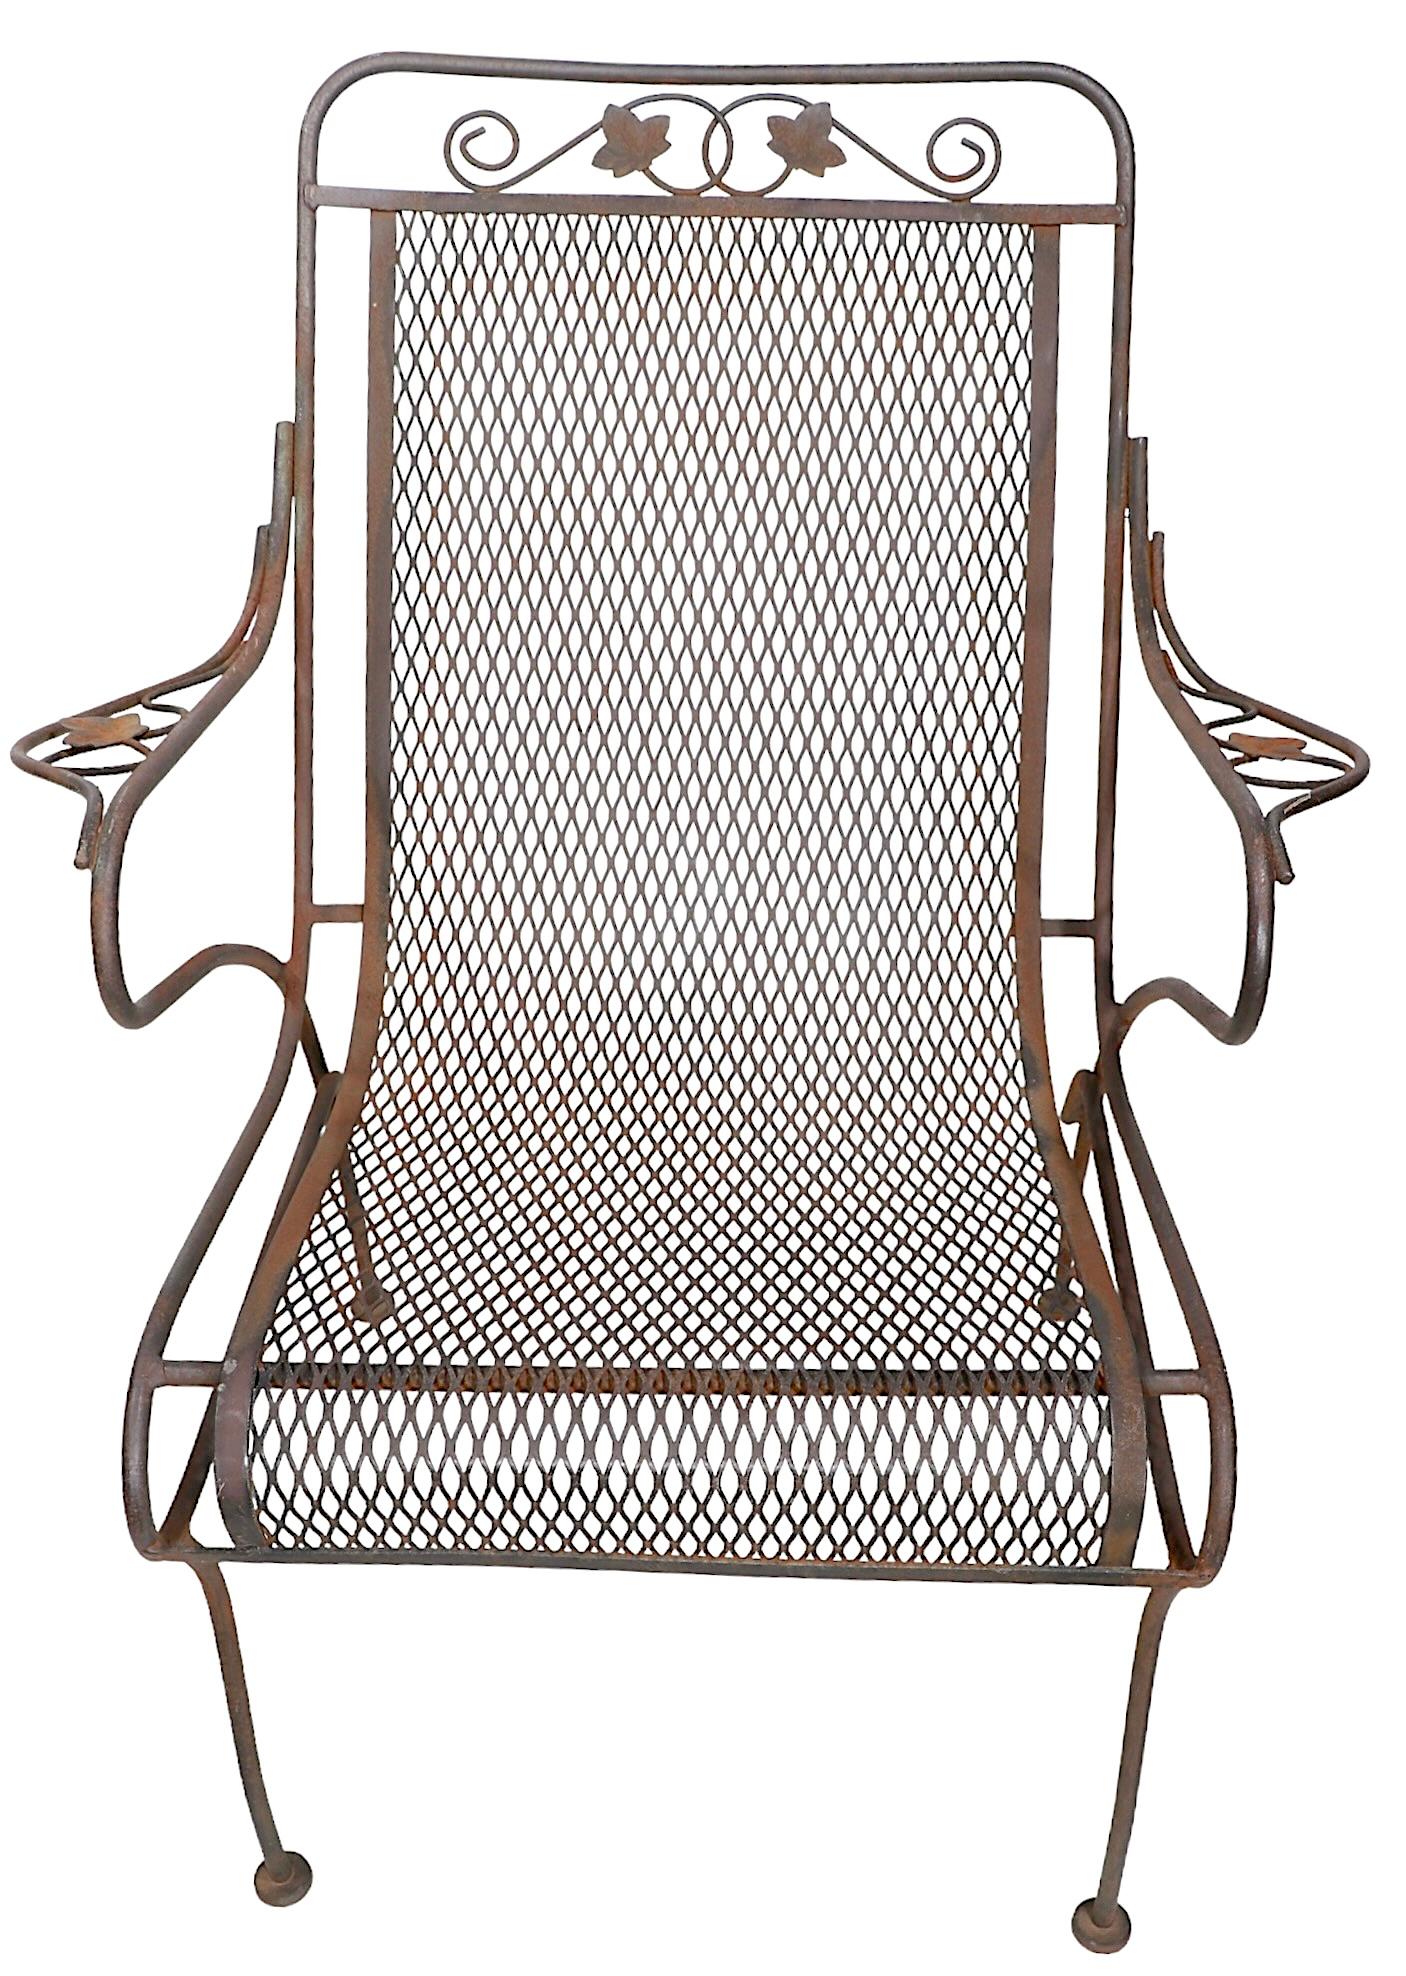 Wrought Iron Garden Patio Poolside Arm Lounge Chair att. to Salterini 7